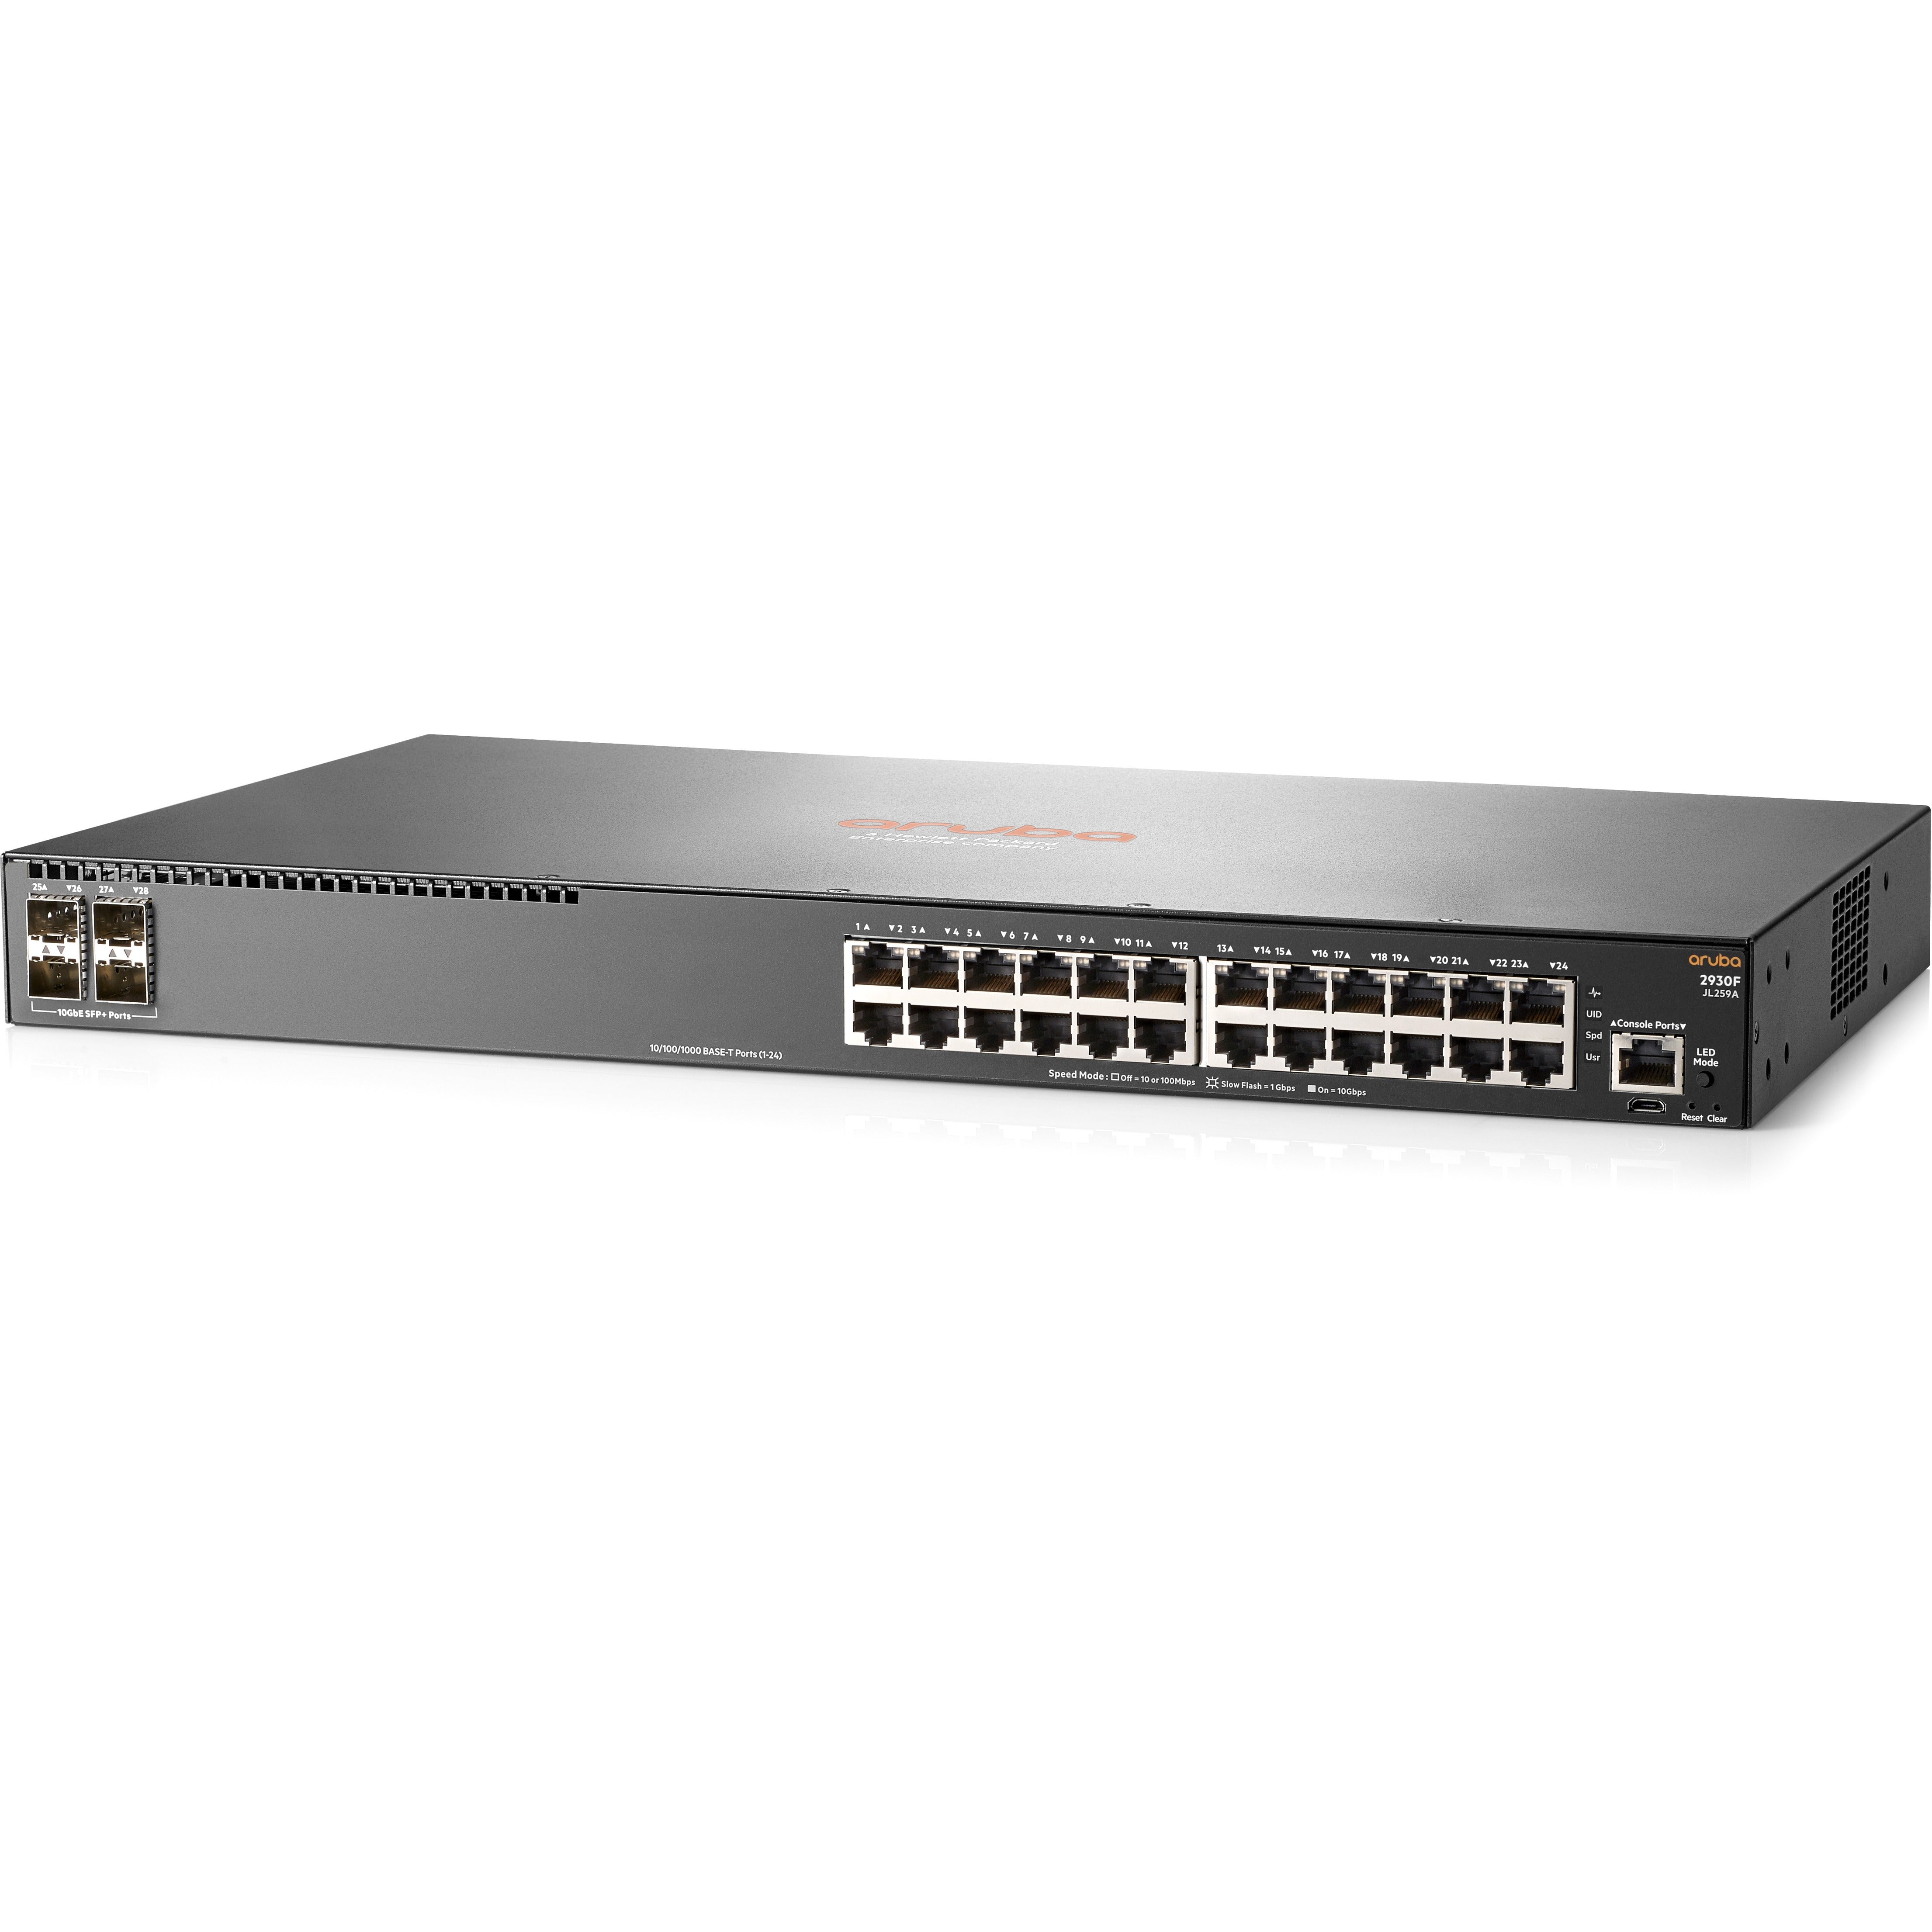 HPE JL259A 2930F 24G 4SFP Switch, Gigabit Ethernet, 24 Network Ports